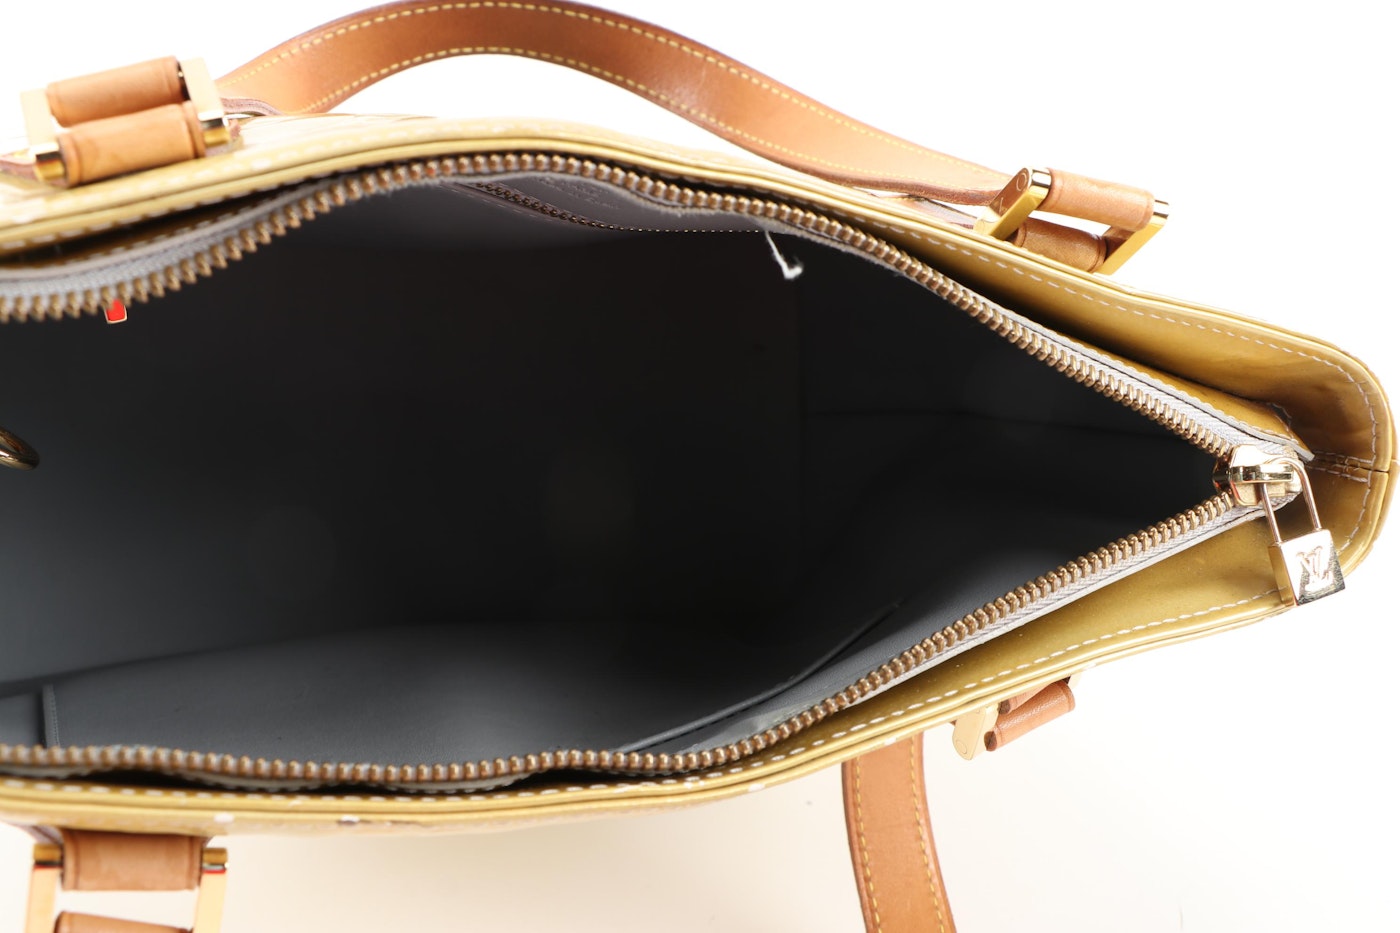 Louis Vuitton Houston Bag in Monogram Vernis and Vachetta Leather | EBTH